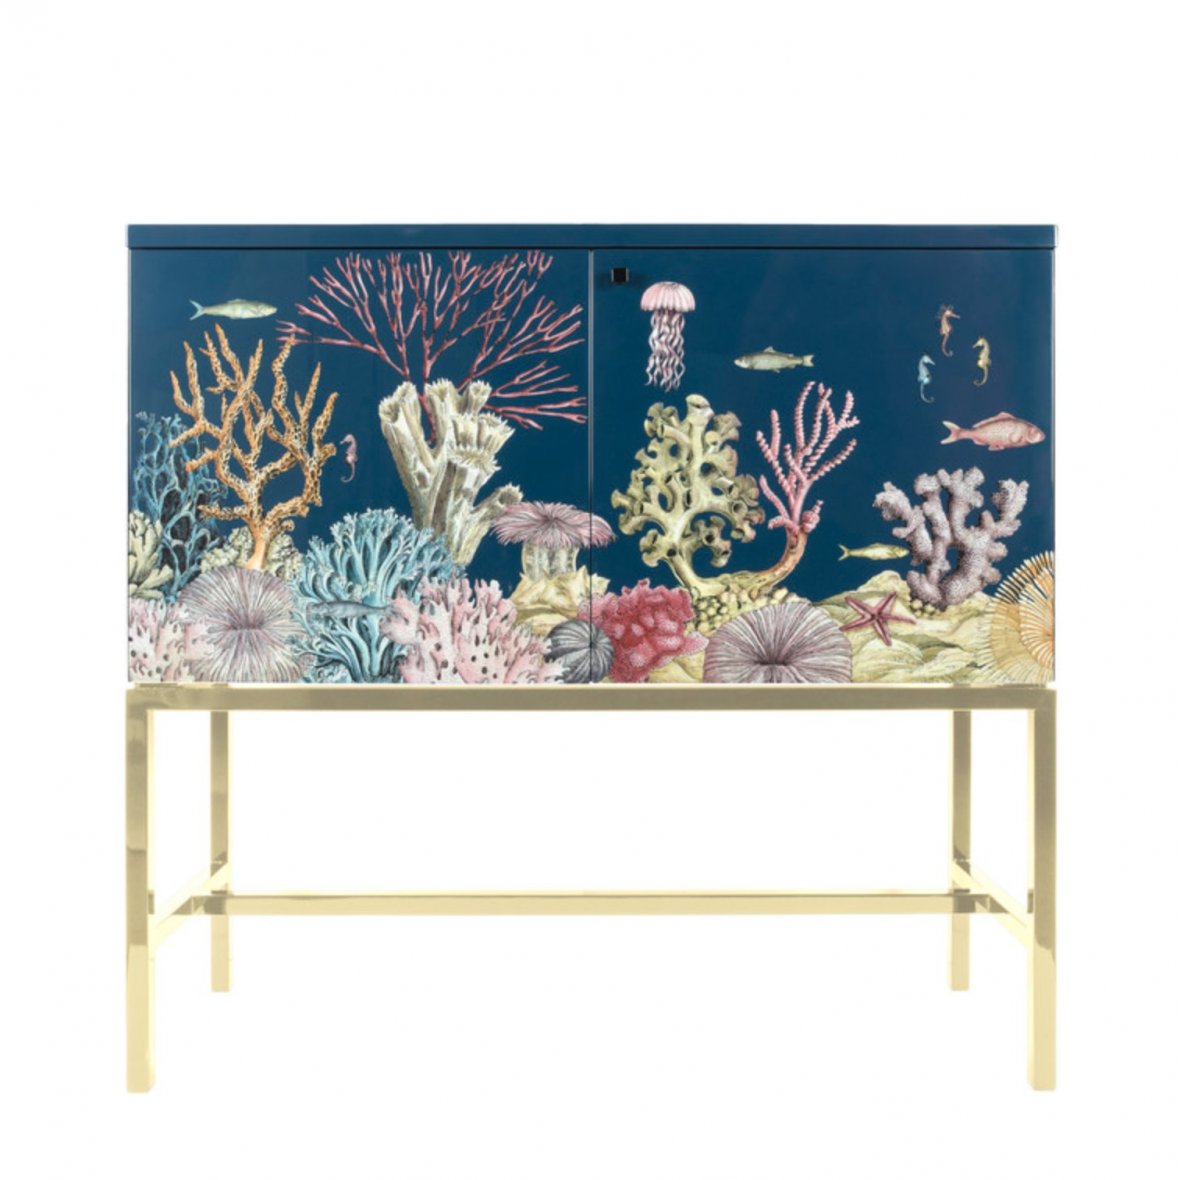 fornasetti-long-raised-sideboard-fondo-marino-colour-brass-base